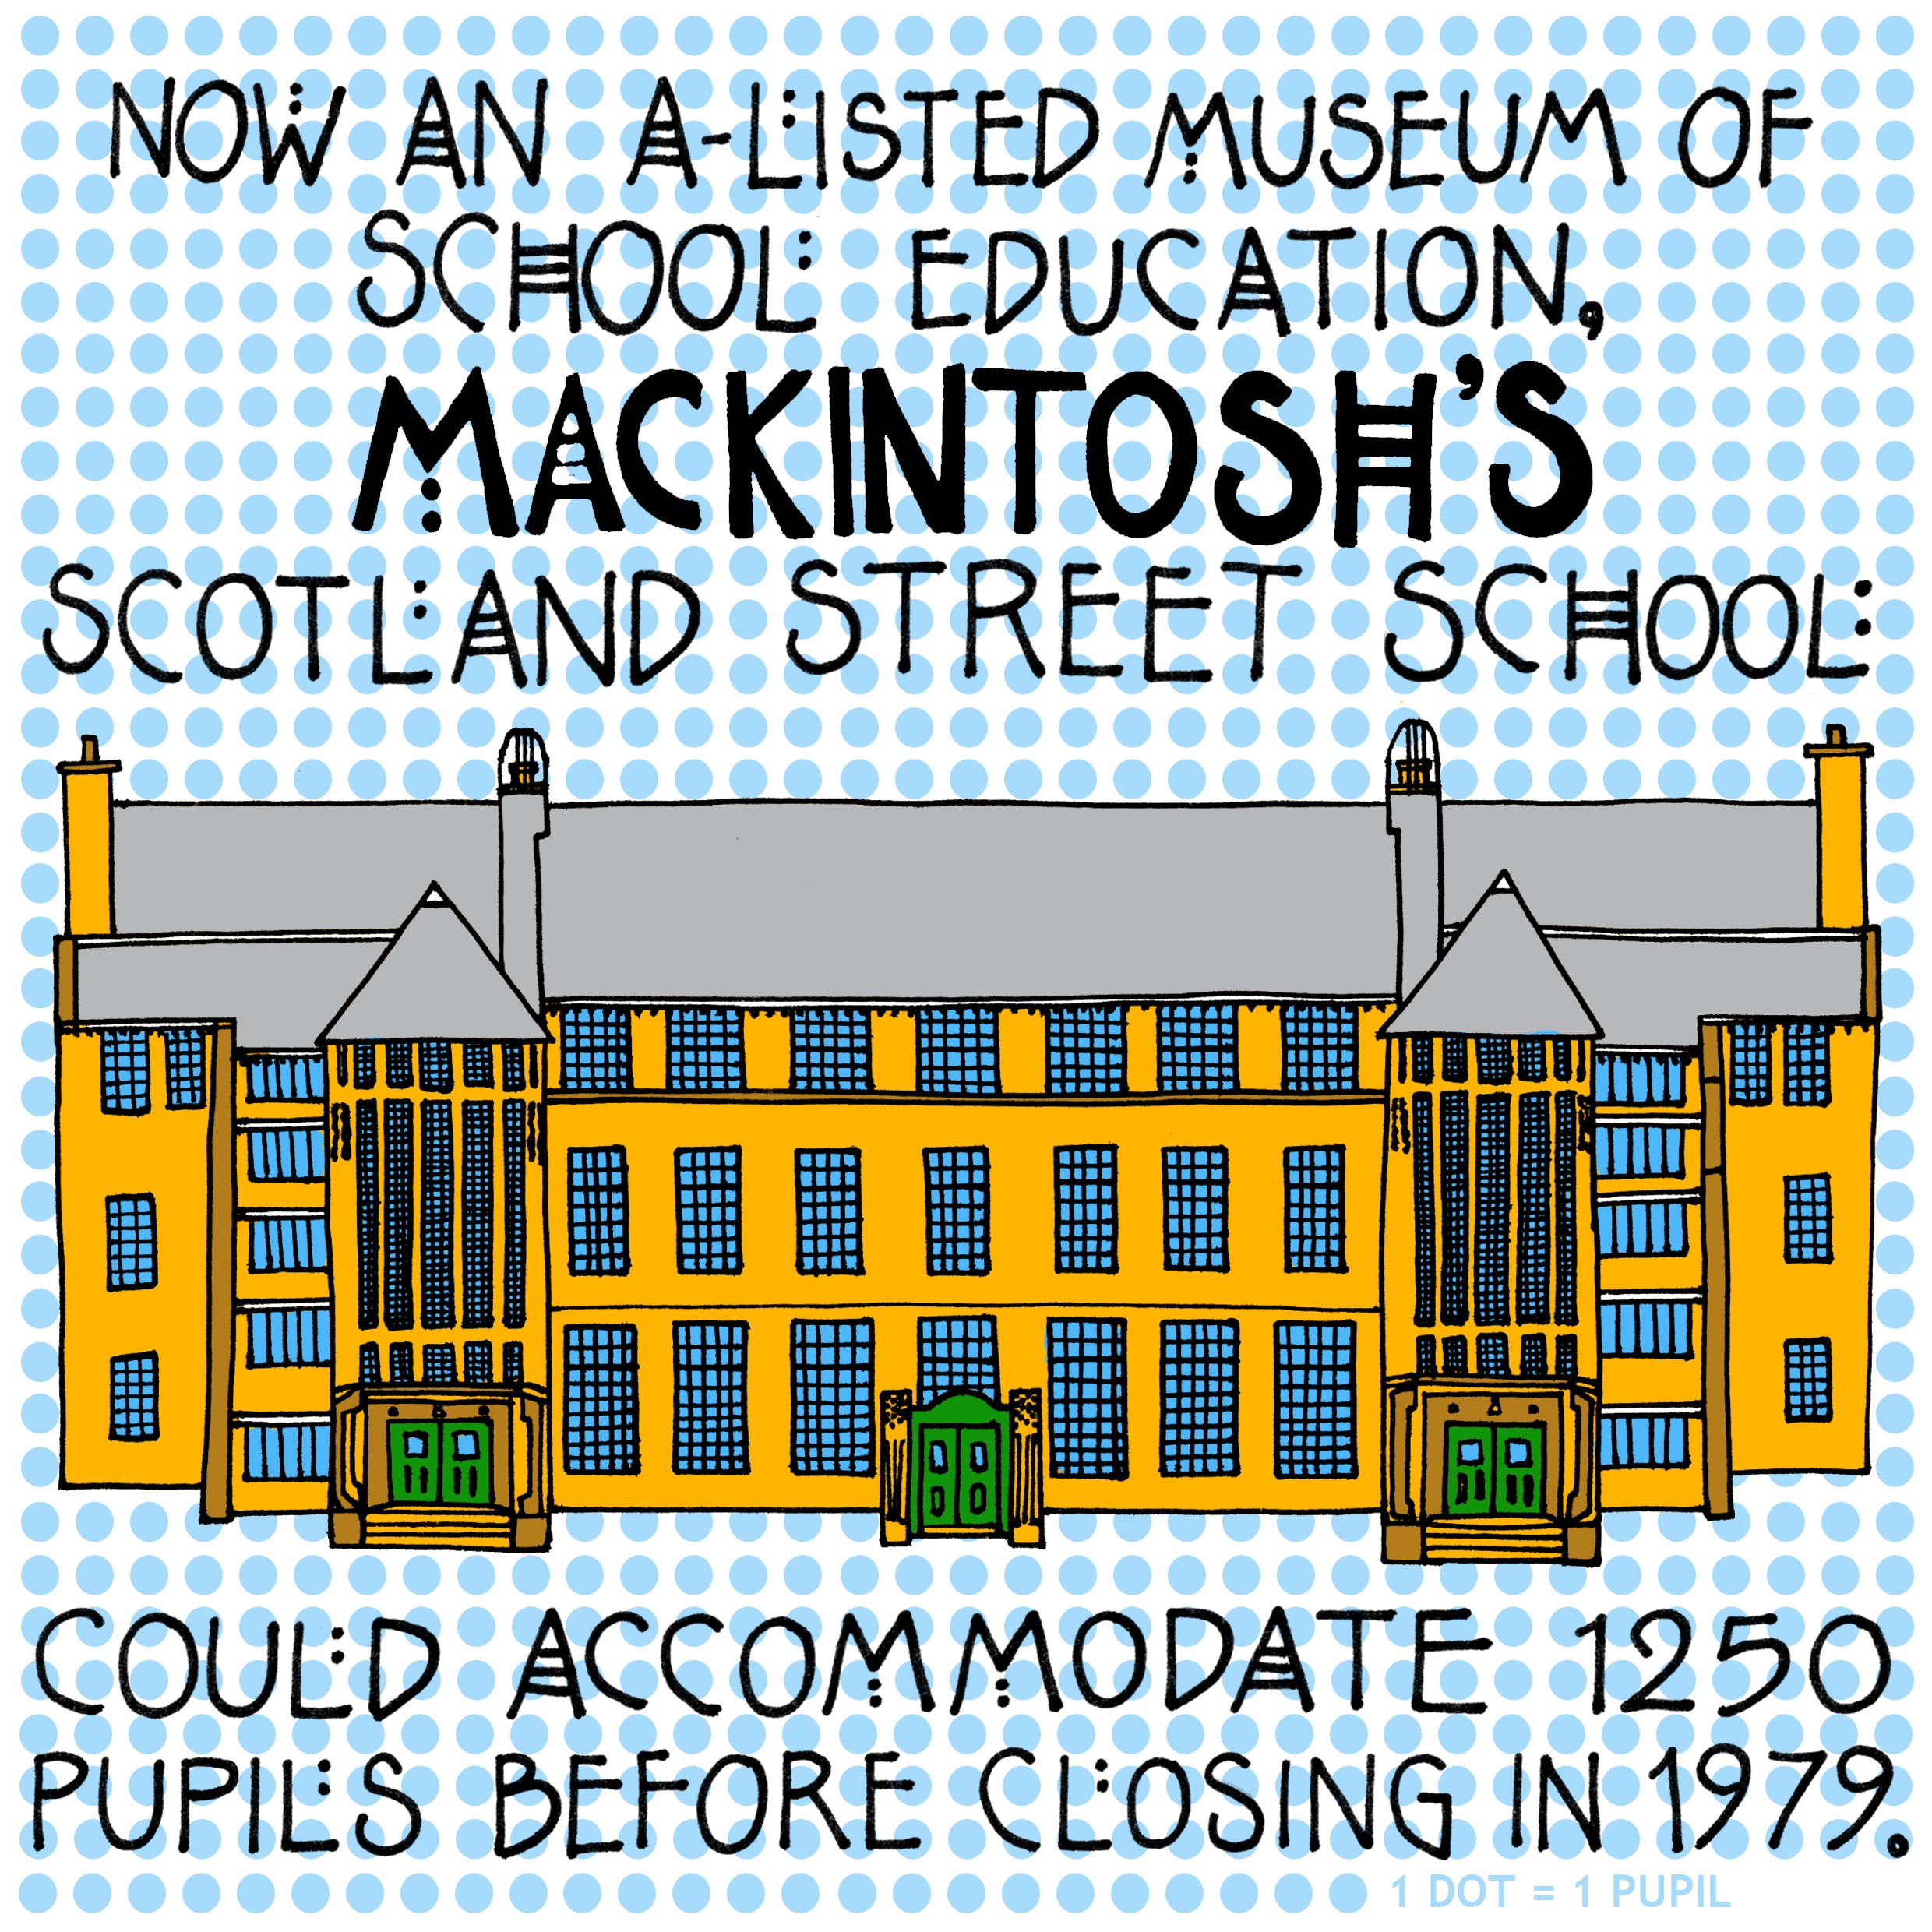 Scotland Street School May